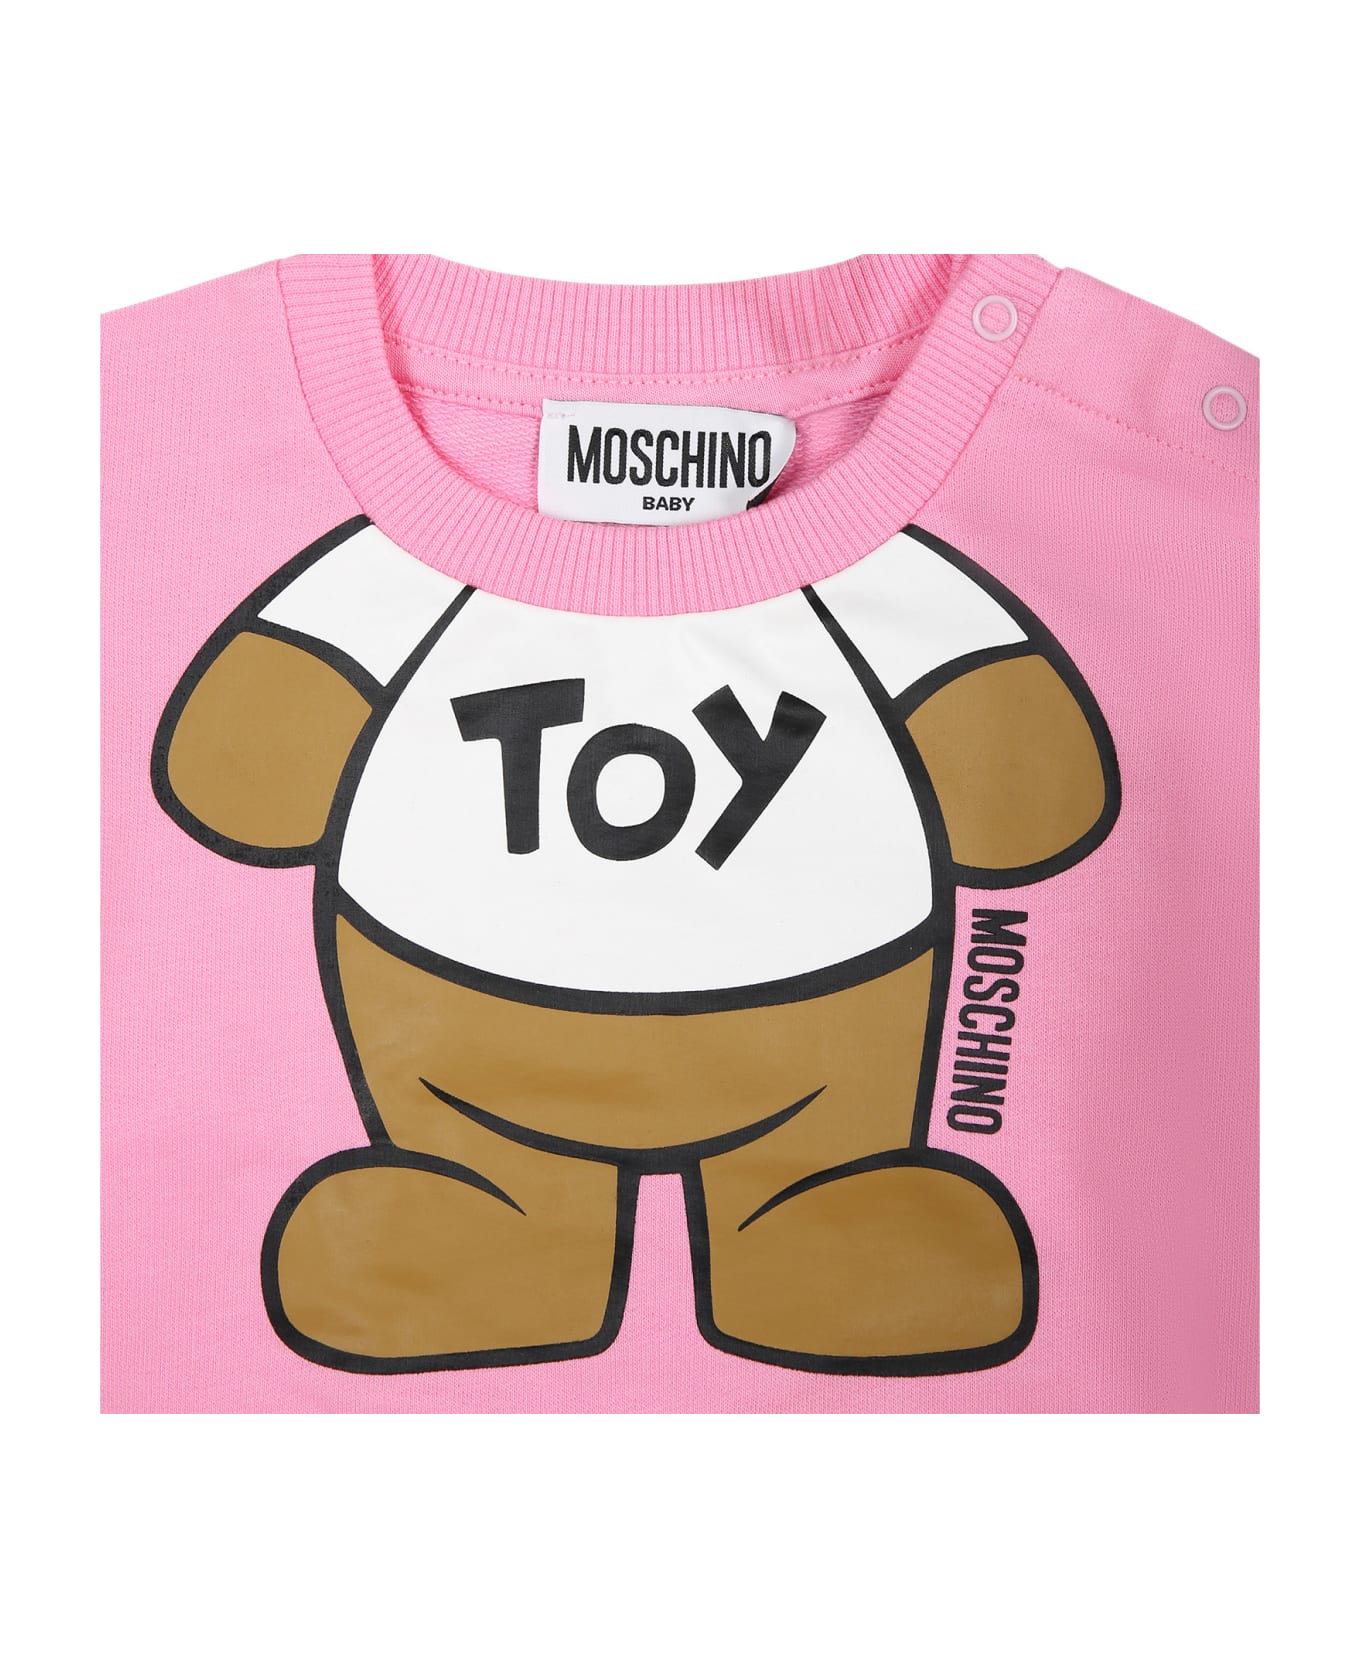 Moschino Pink Sweatshirt For Baby Girl With Teddy Bear - Pink